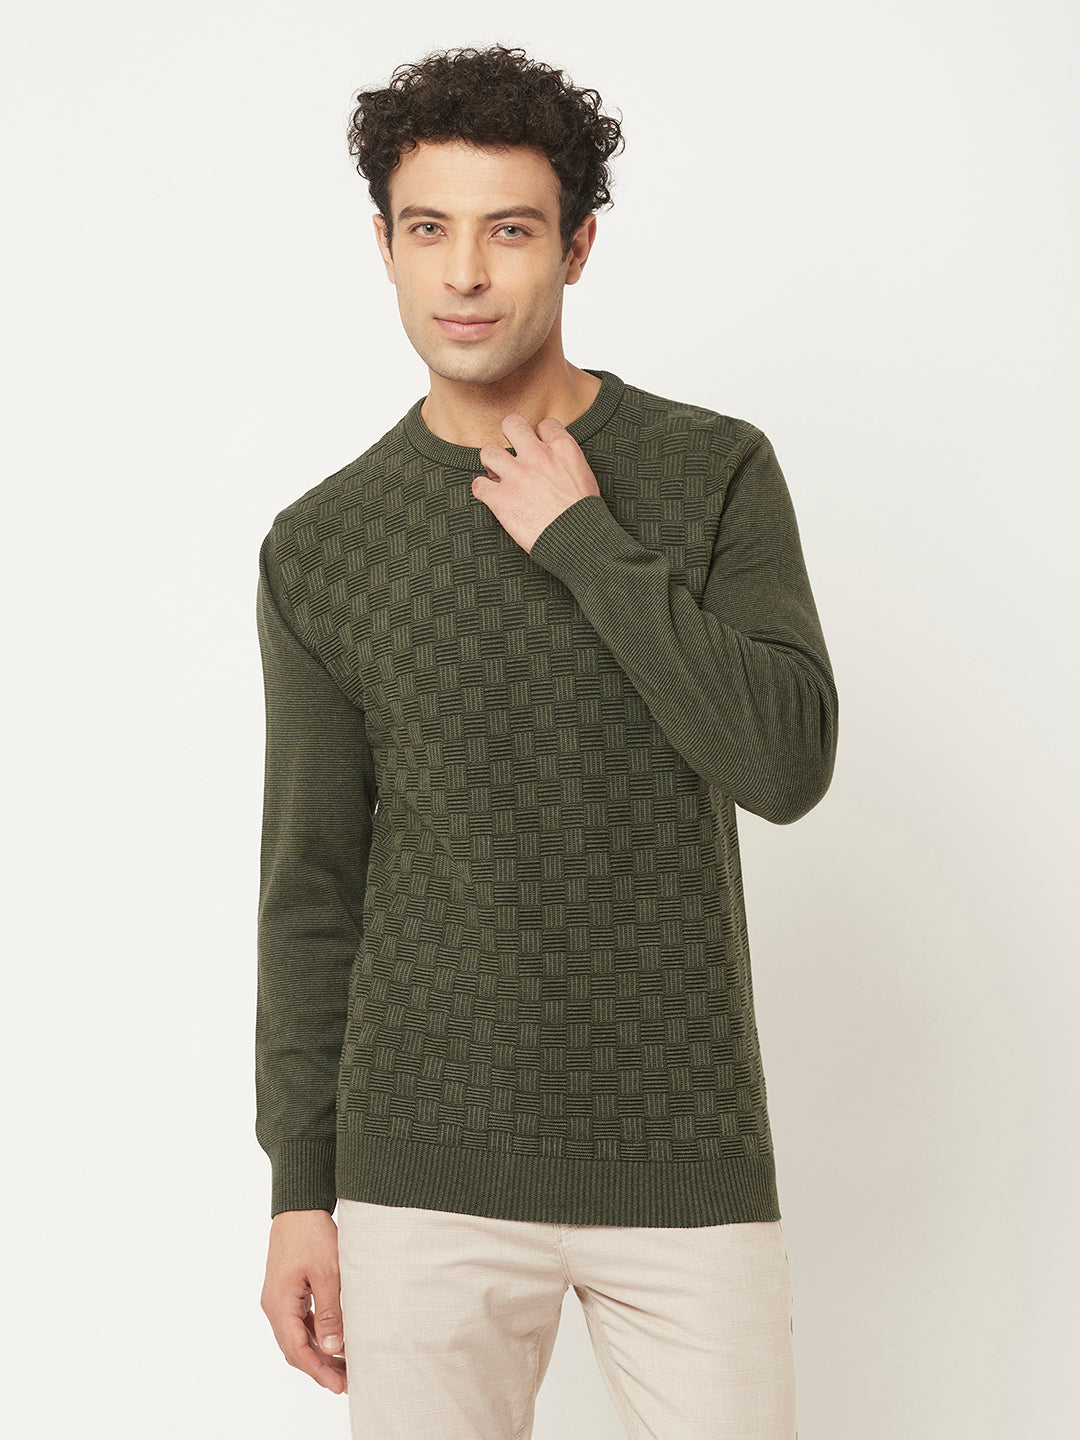 Army Green Sweater in Self Design Pattern-Men Sweaters-Crimsoune Club